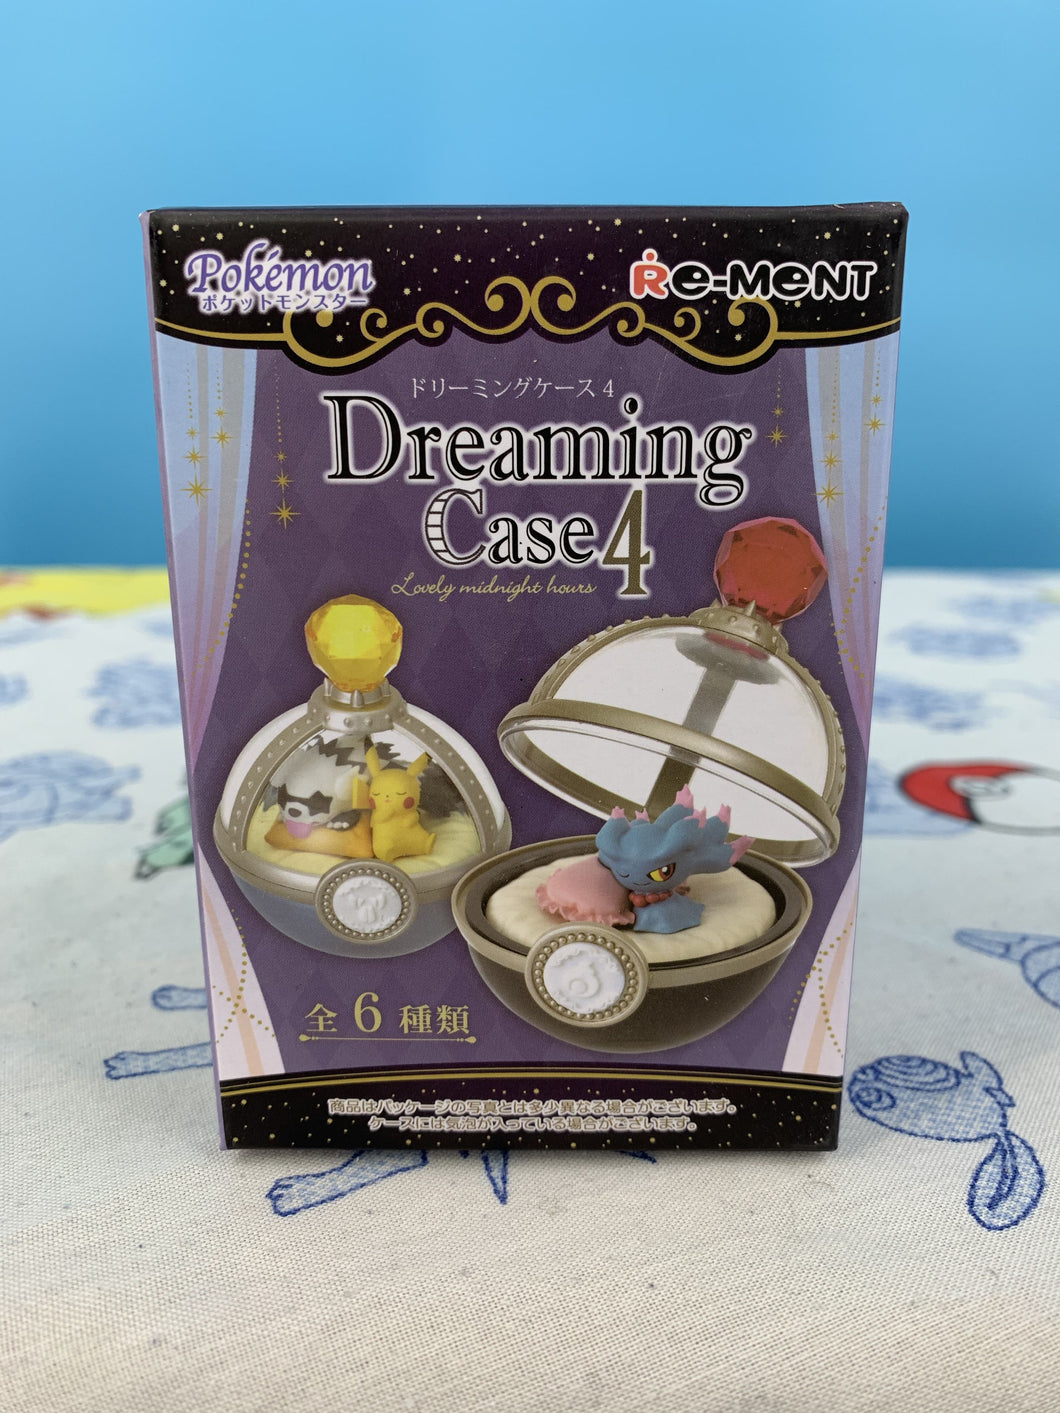 Re-Ment Pokemon Dreaming Case 4 Lovely Midnight Hour Mystery Blind Box